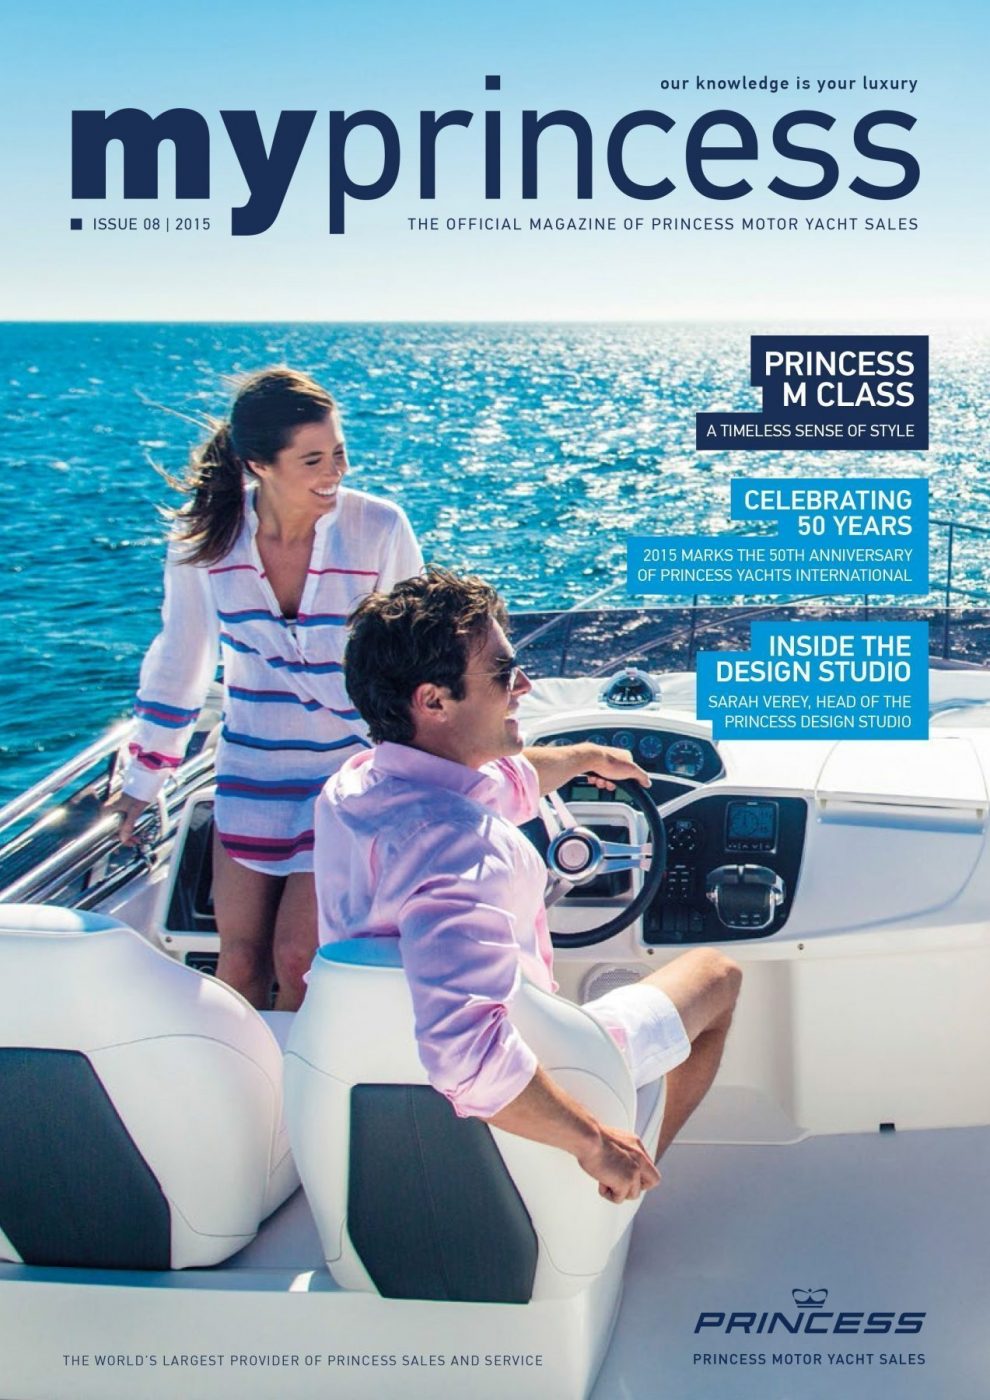 Princess Motor Yacht Sales - My Princess Cover 2015